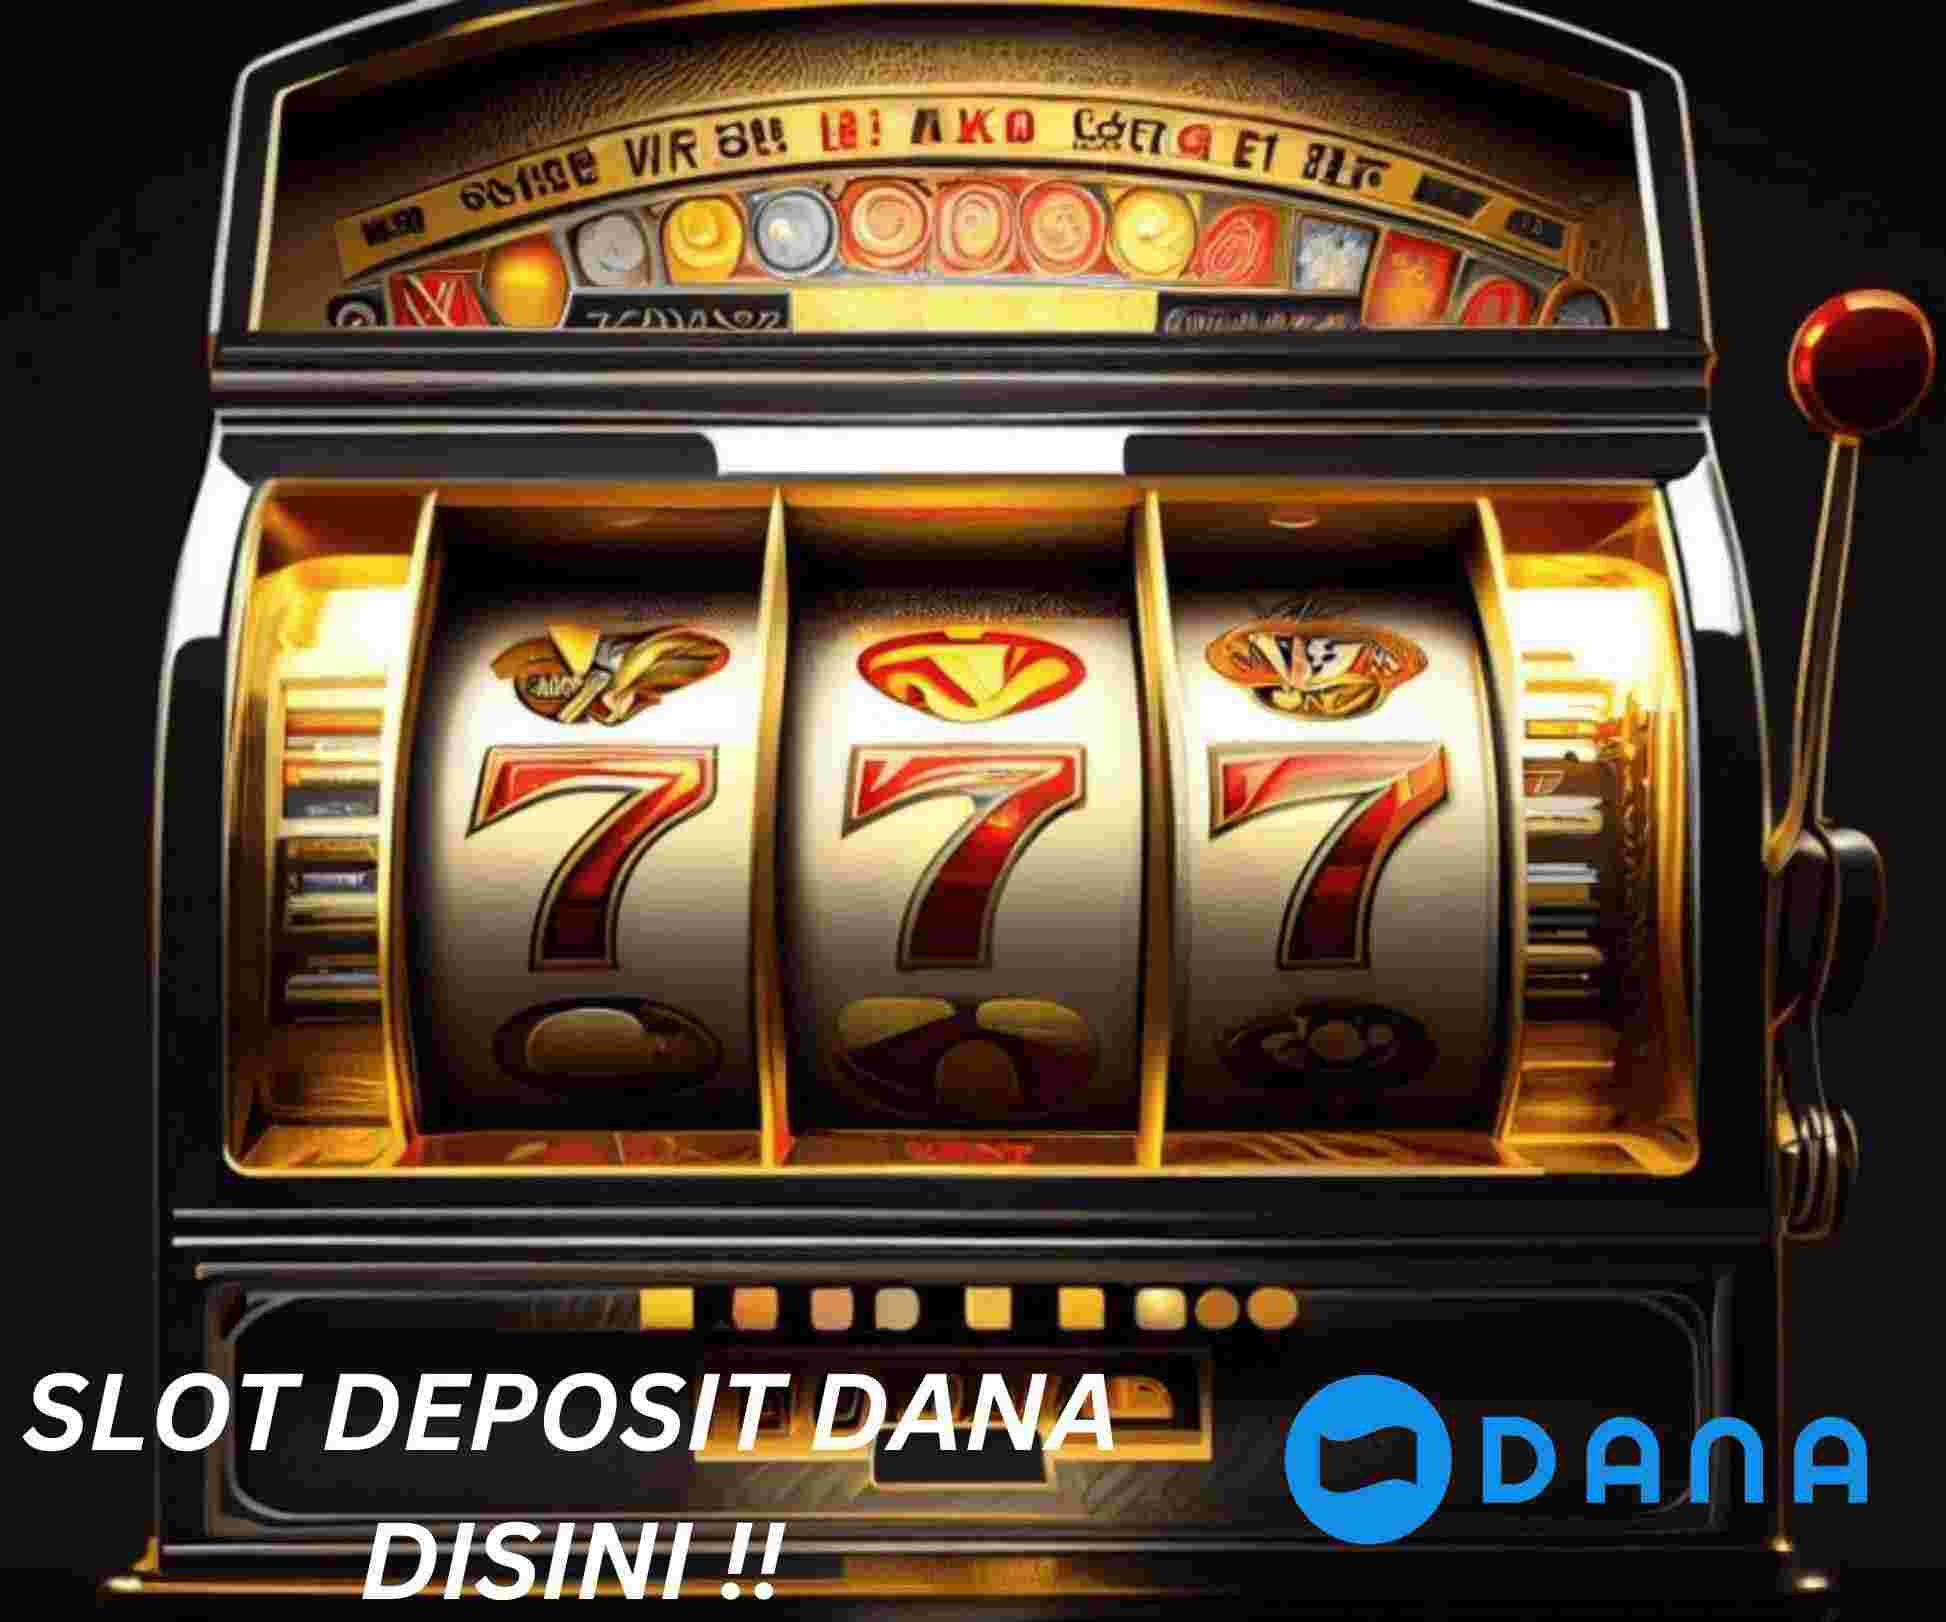 Slot Dana 5000 can deposit capital funds of IDR 5000